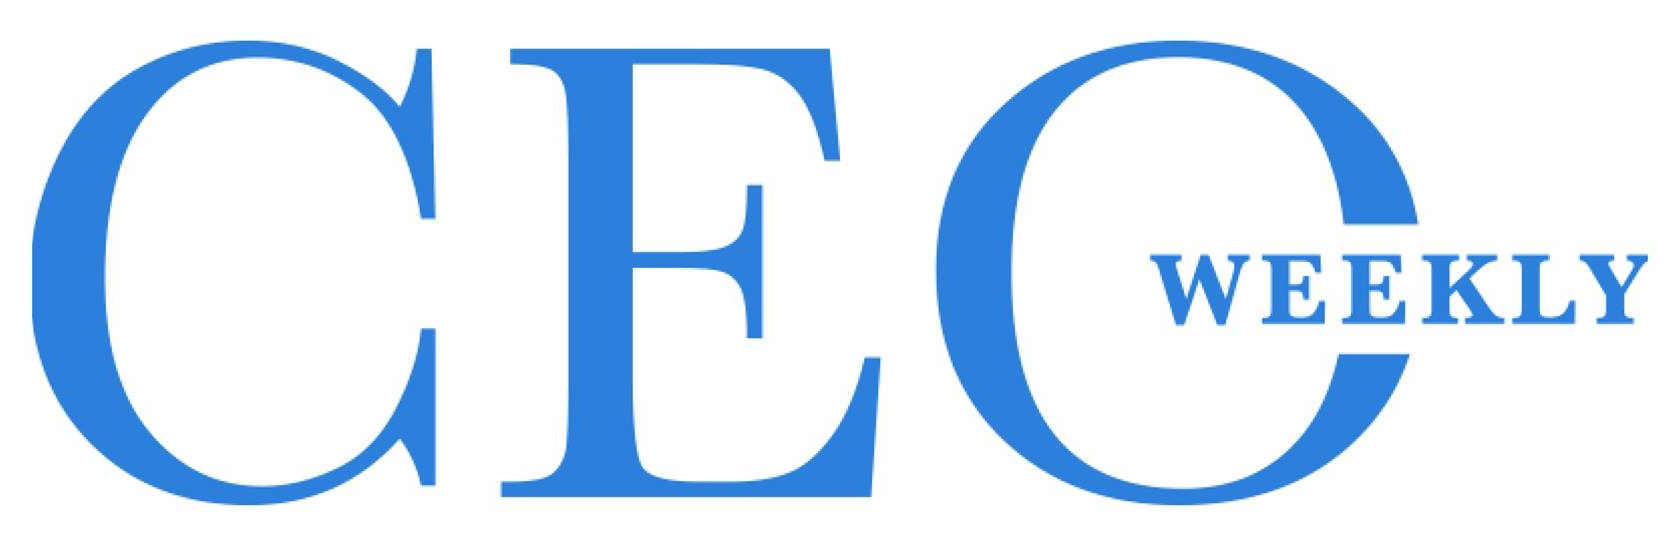 CEO Weekly logo